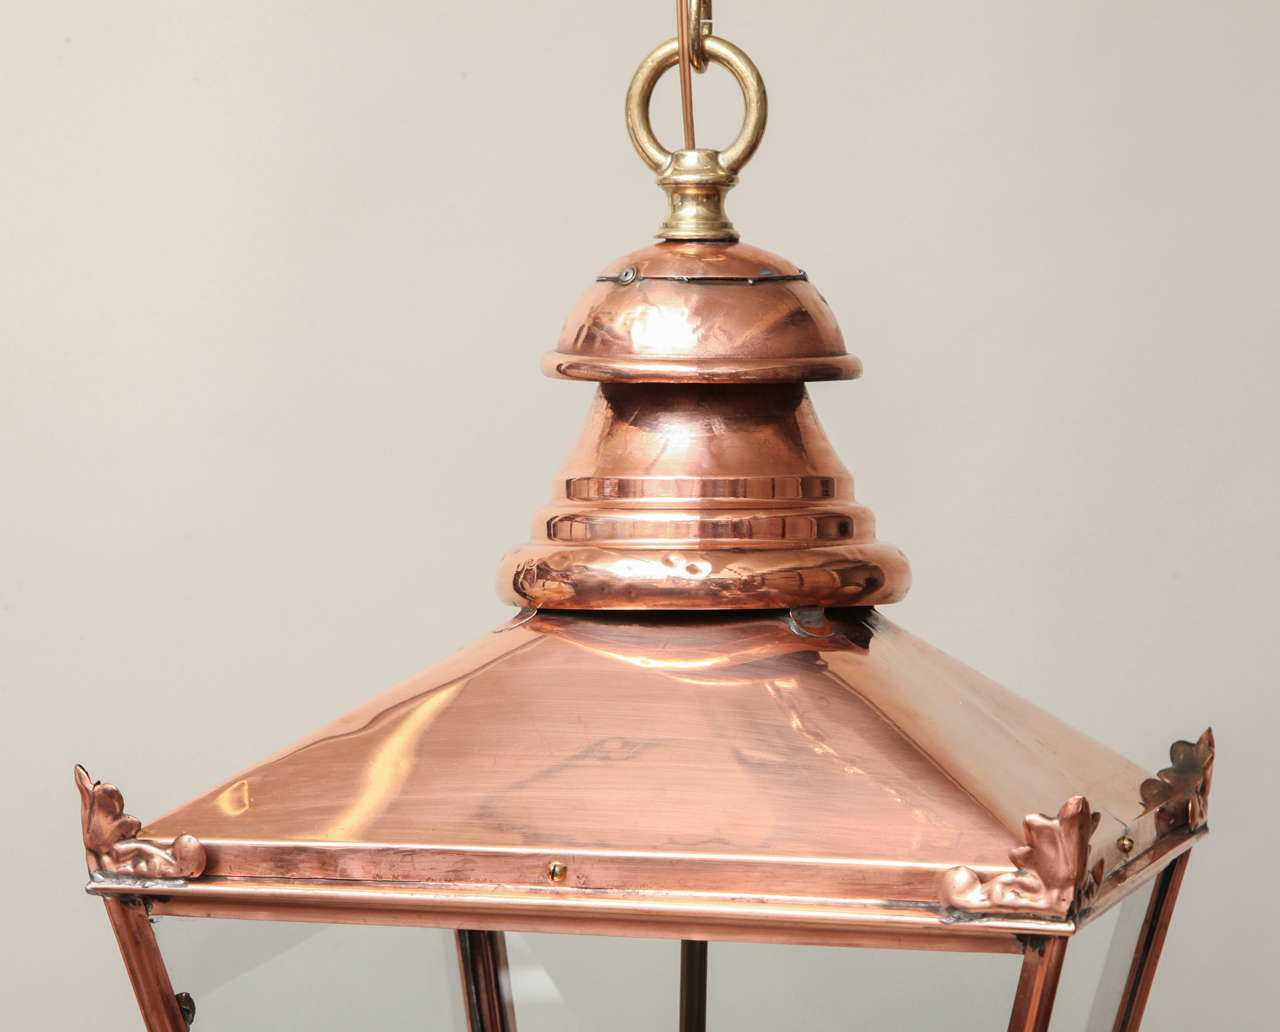 British 19th Century English Copper and Brass Lantern